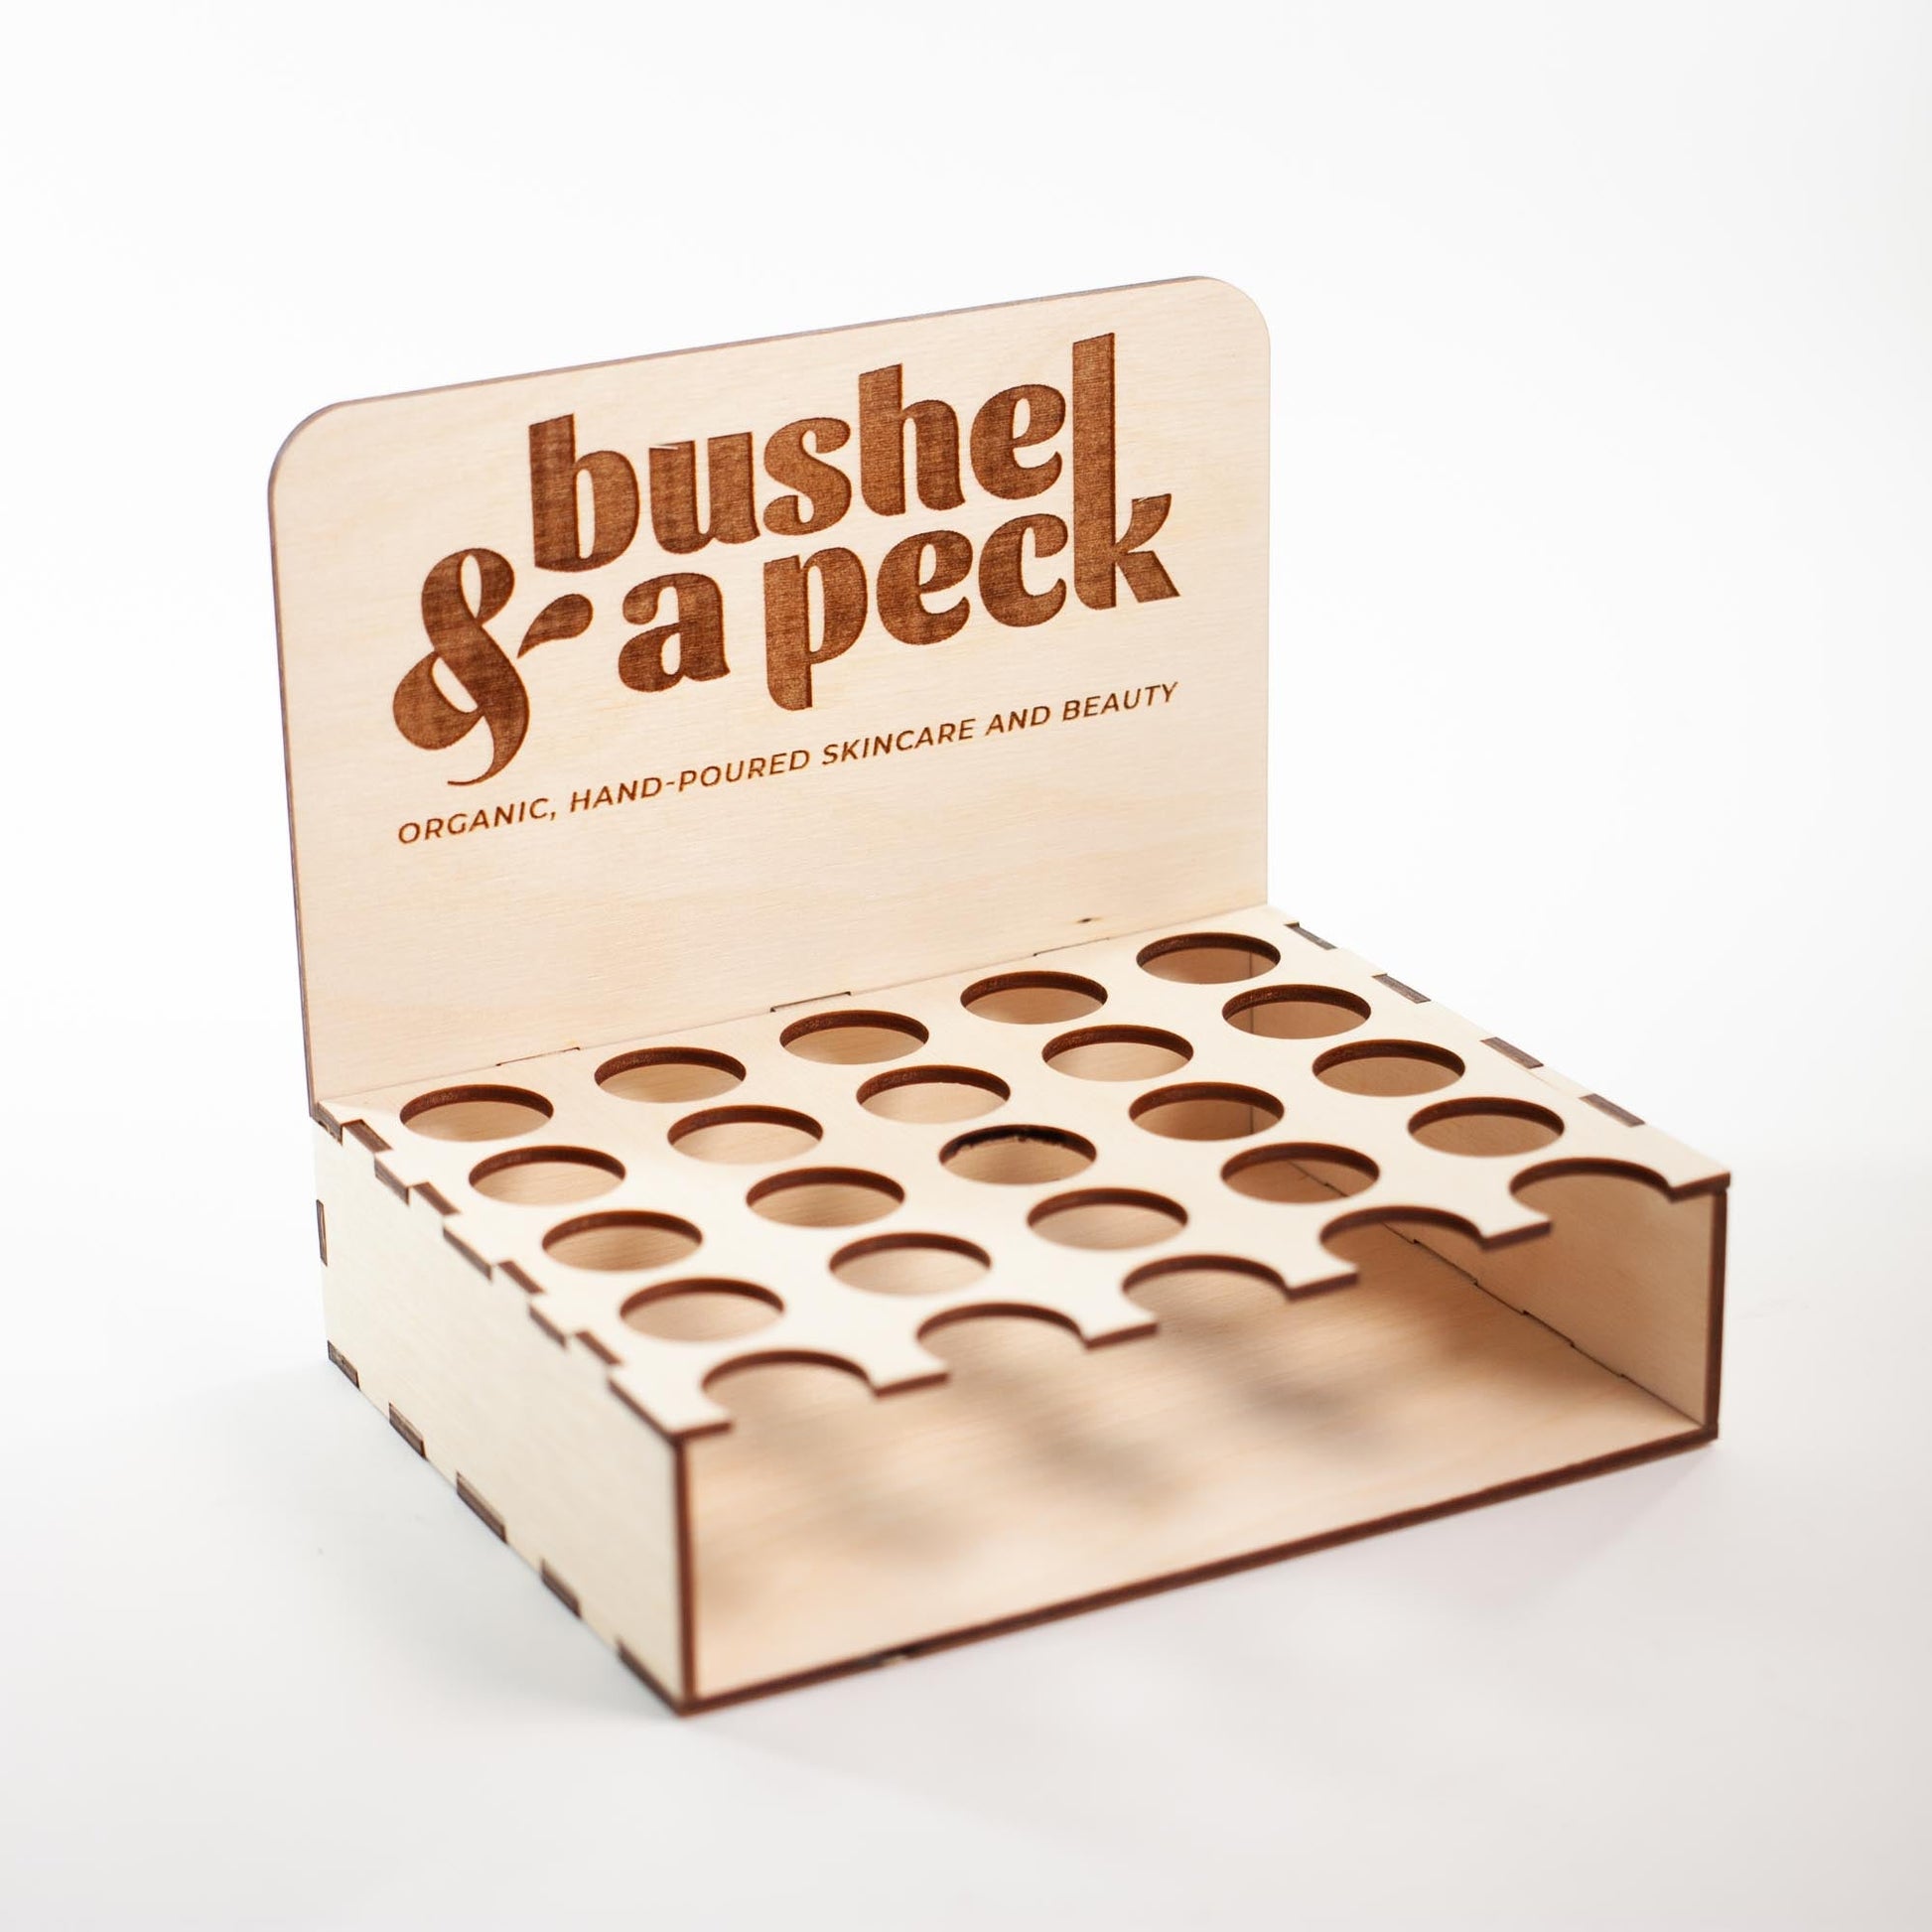 Custom Lip Balm Display Boxes - 25 Lip Balms - Bushel & A Peck Skincare by LeeMo Designs in Bend, Oregon